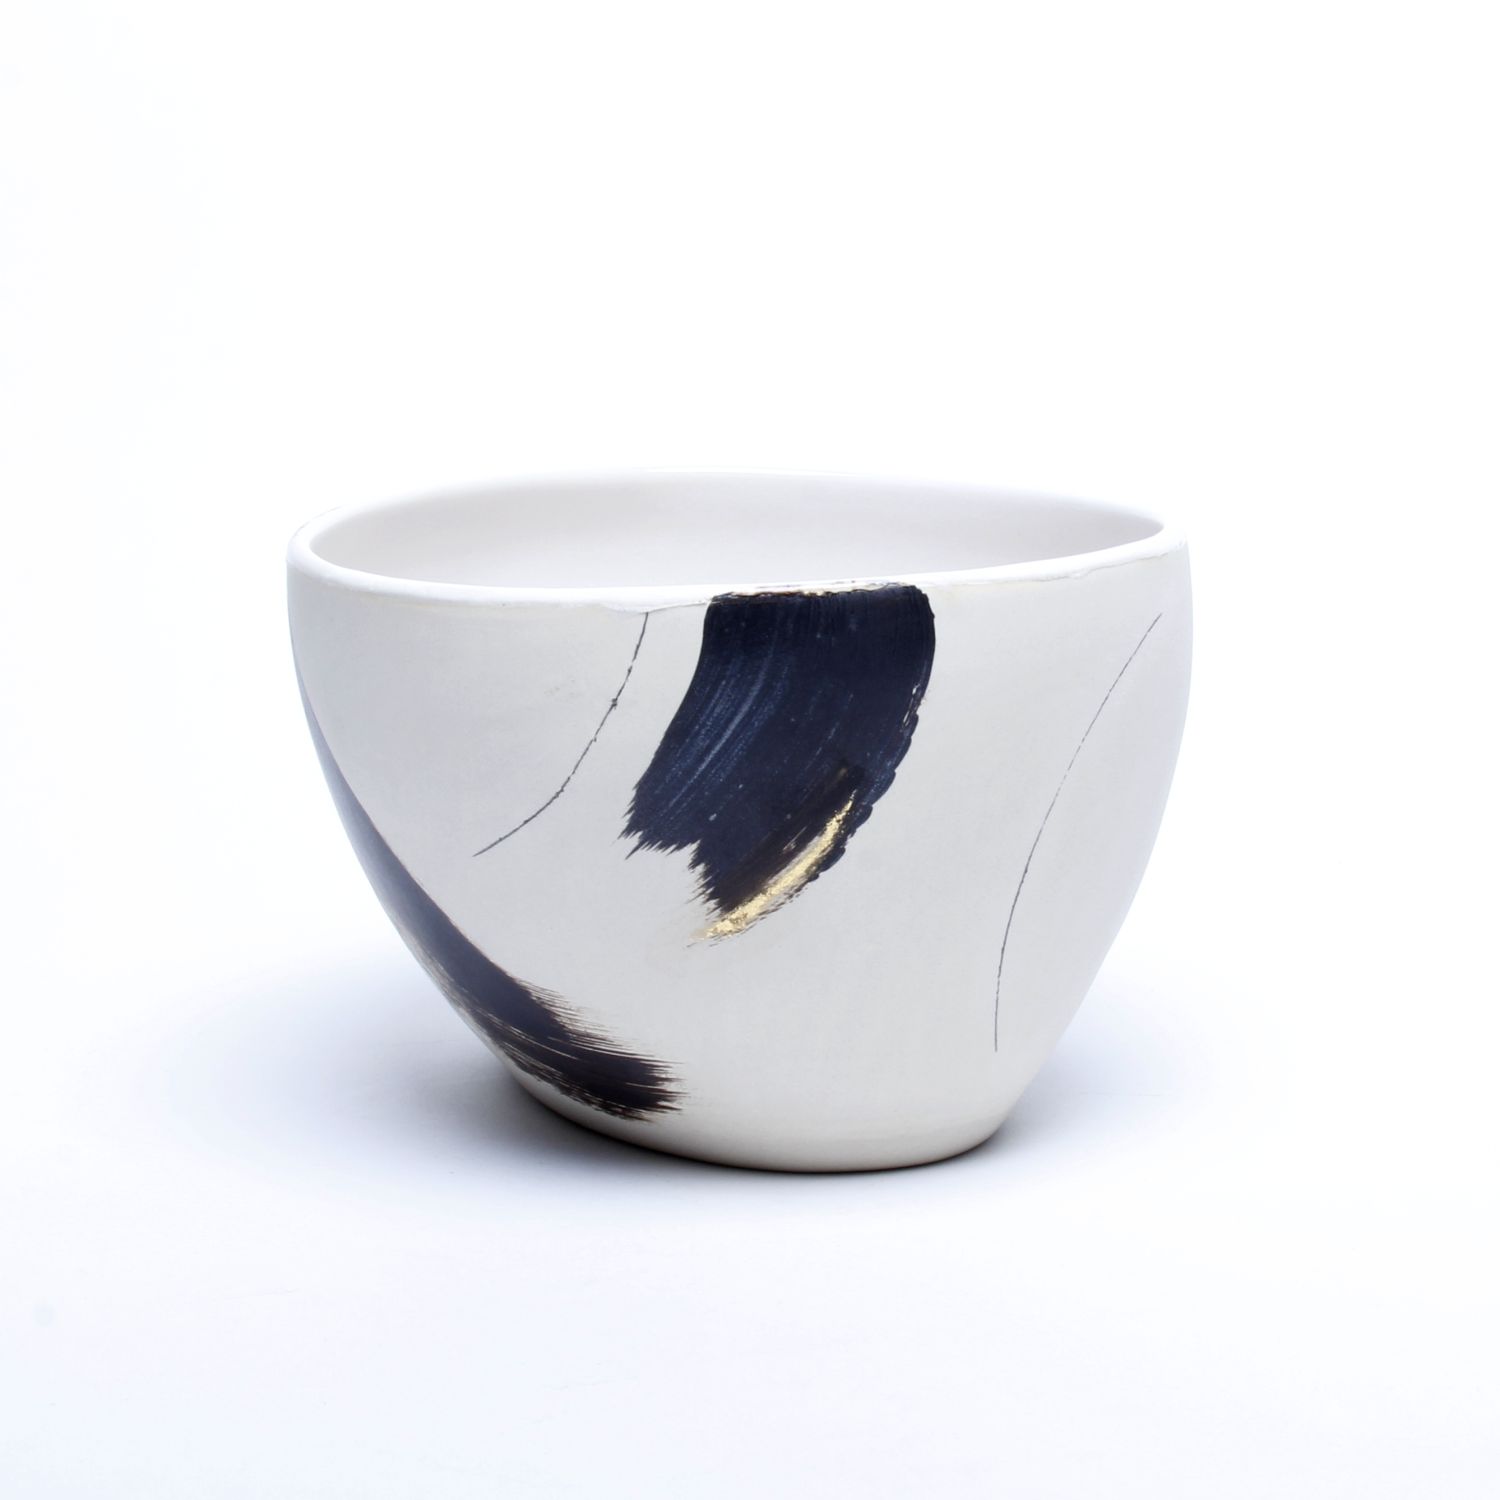 Jane Wilson: Large Black and White Bowl Product Image 4 of 4